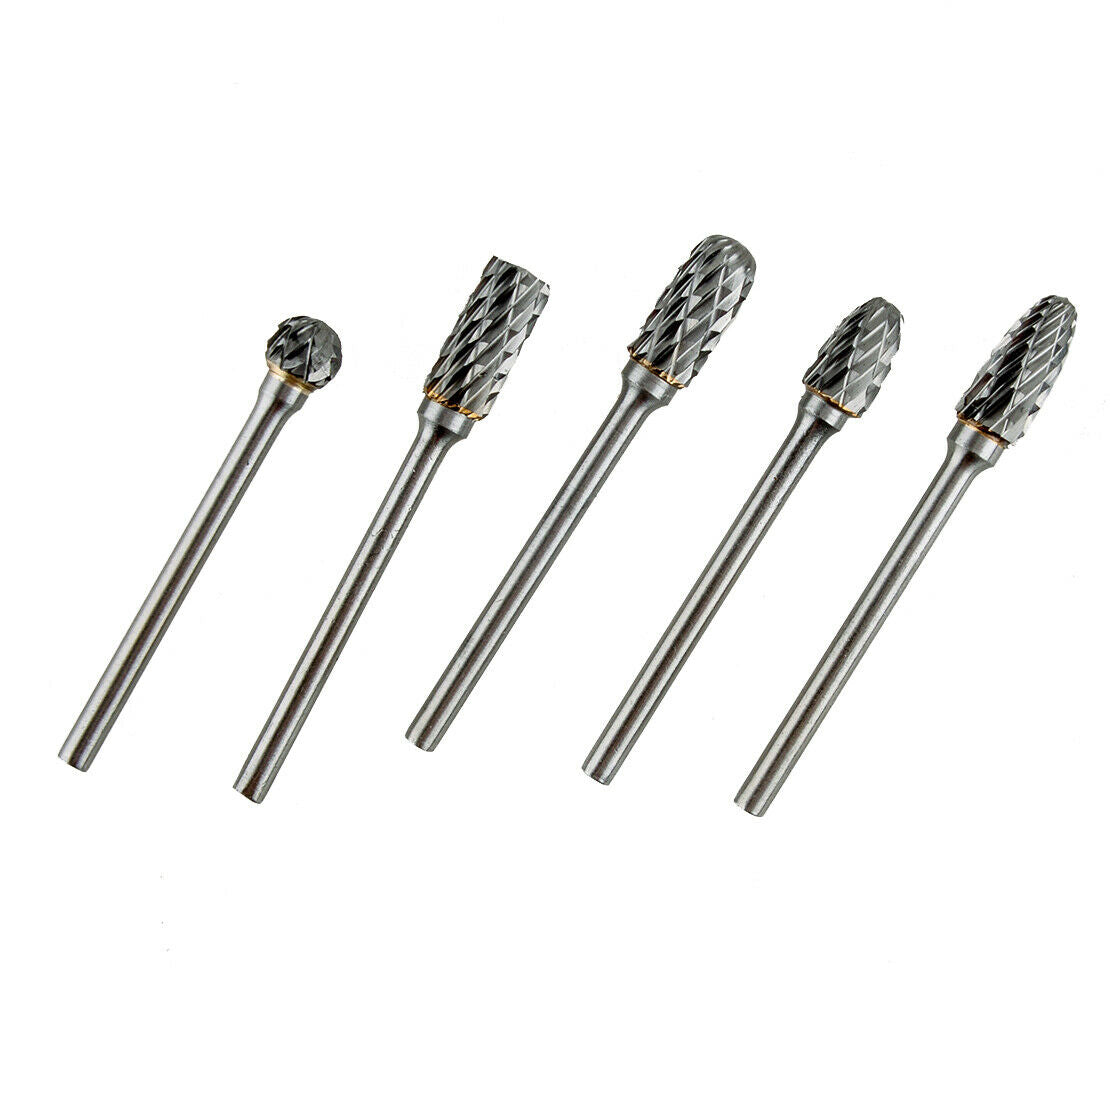 Tungsten Carbide Rotary Burr Drill Bits Die Grinder Shank 1/8" 3mm 10pcs per Kit